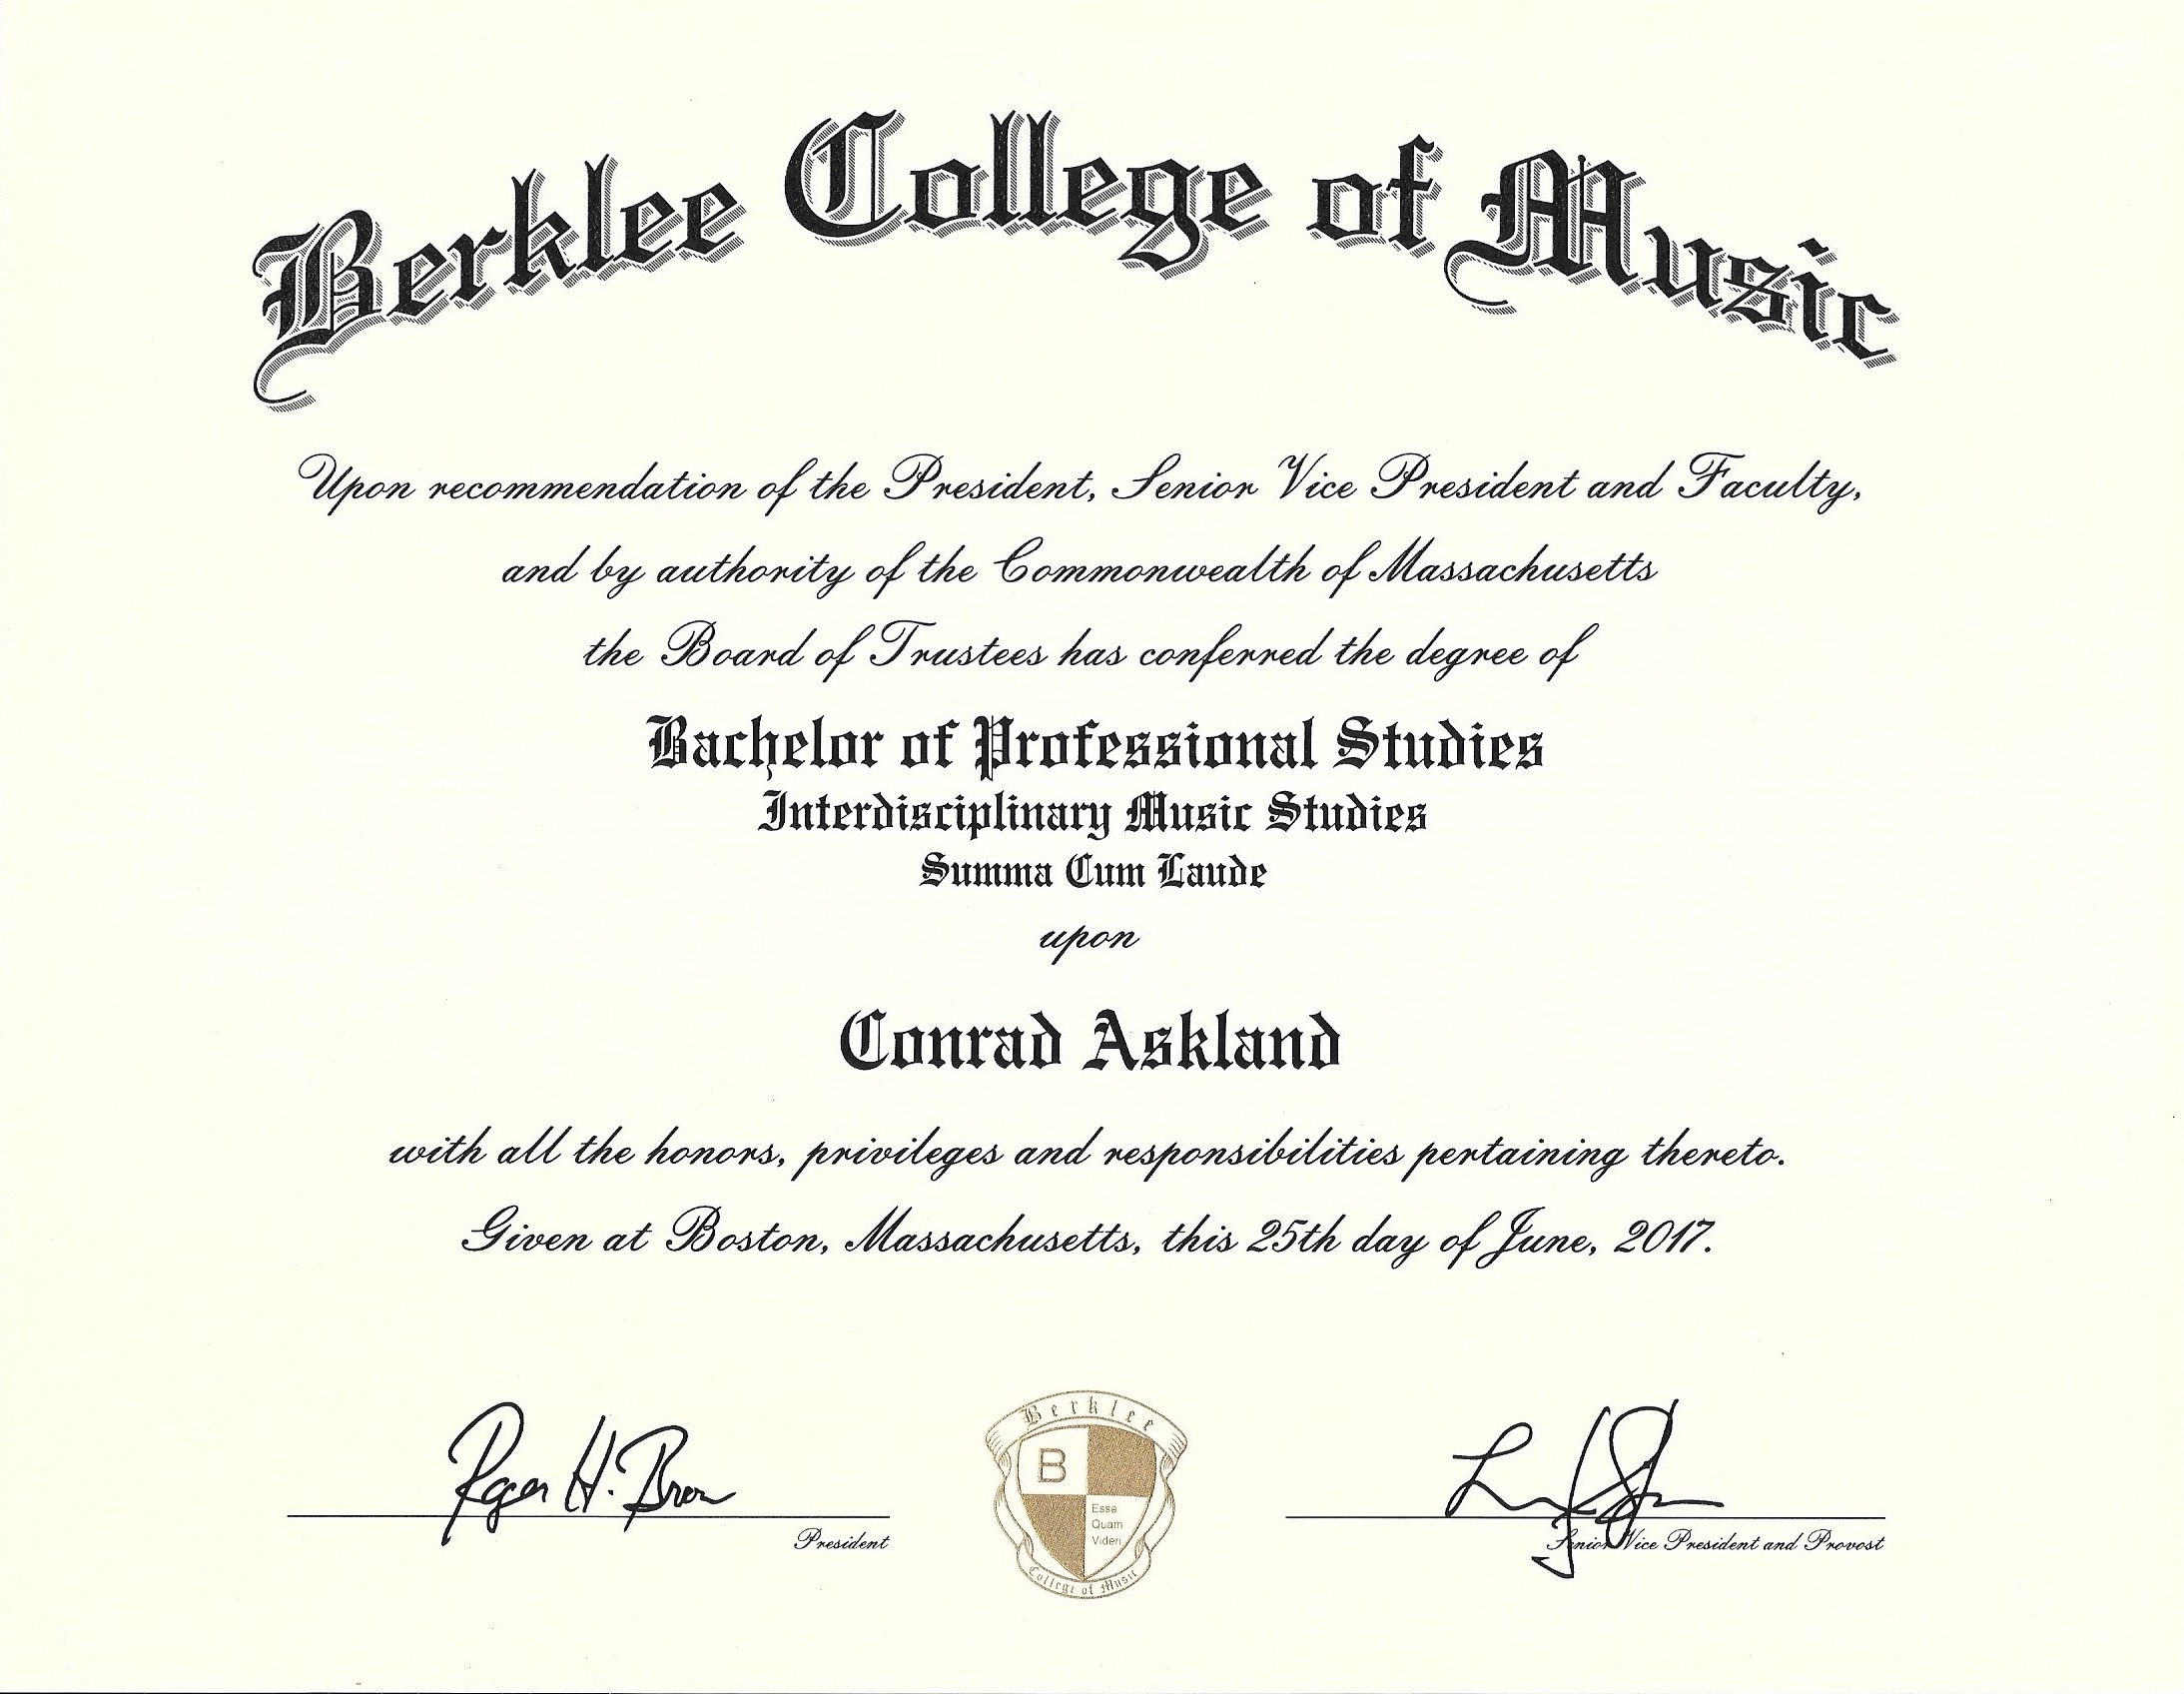 online music education master's degree